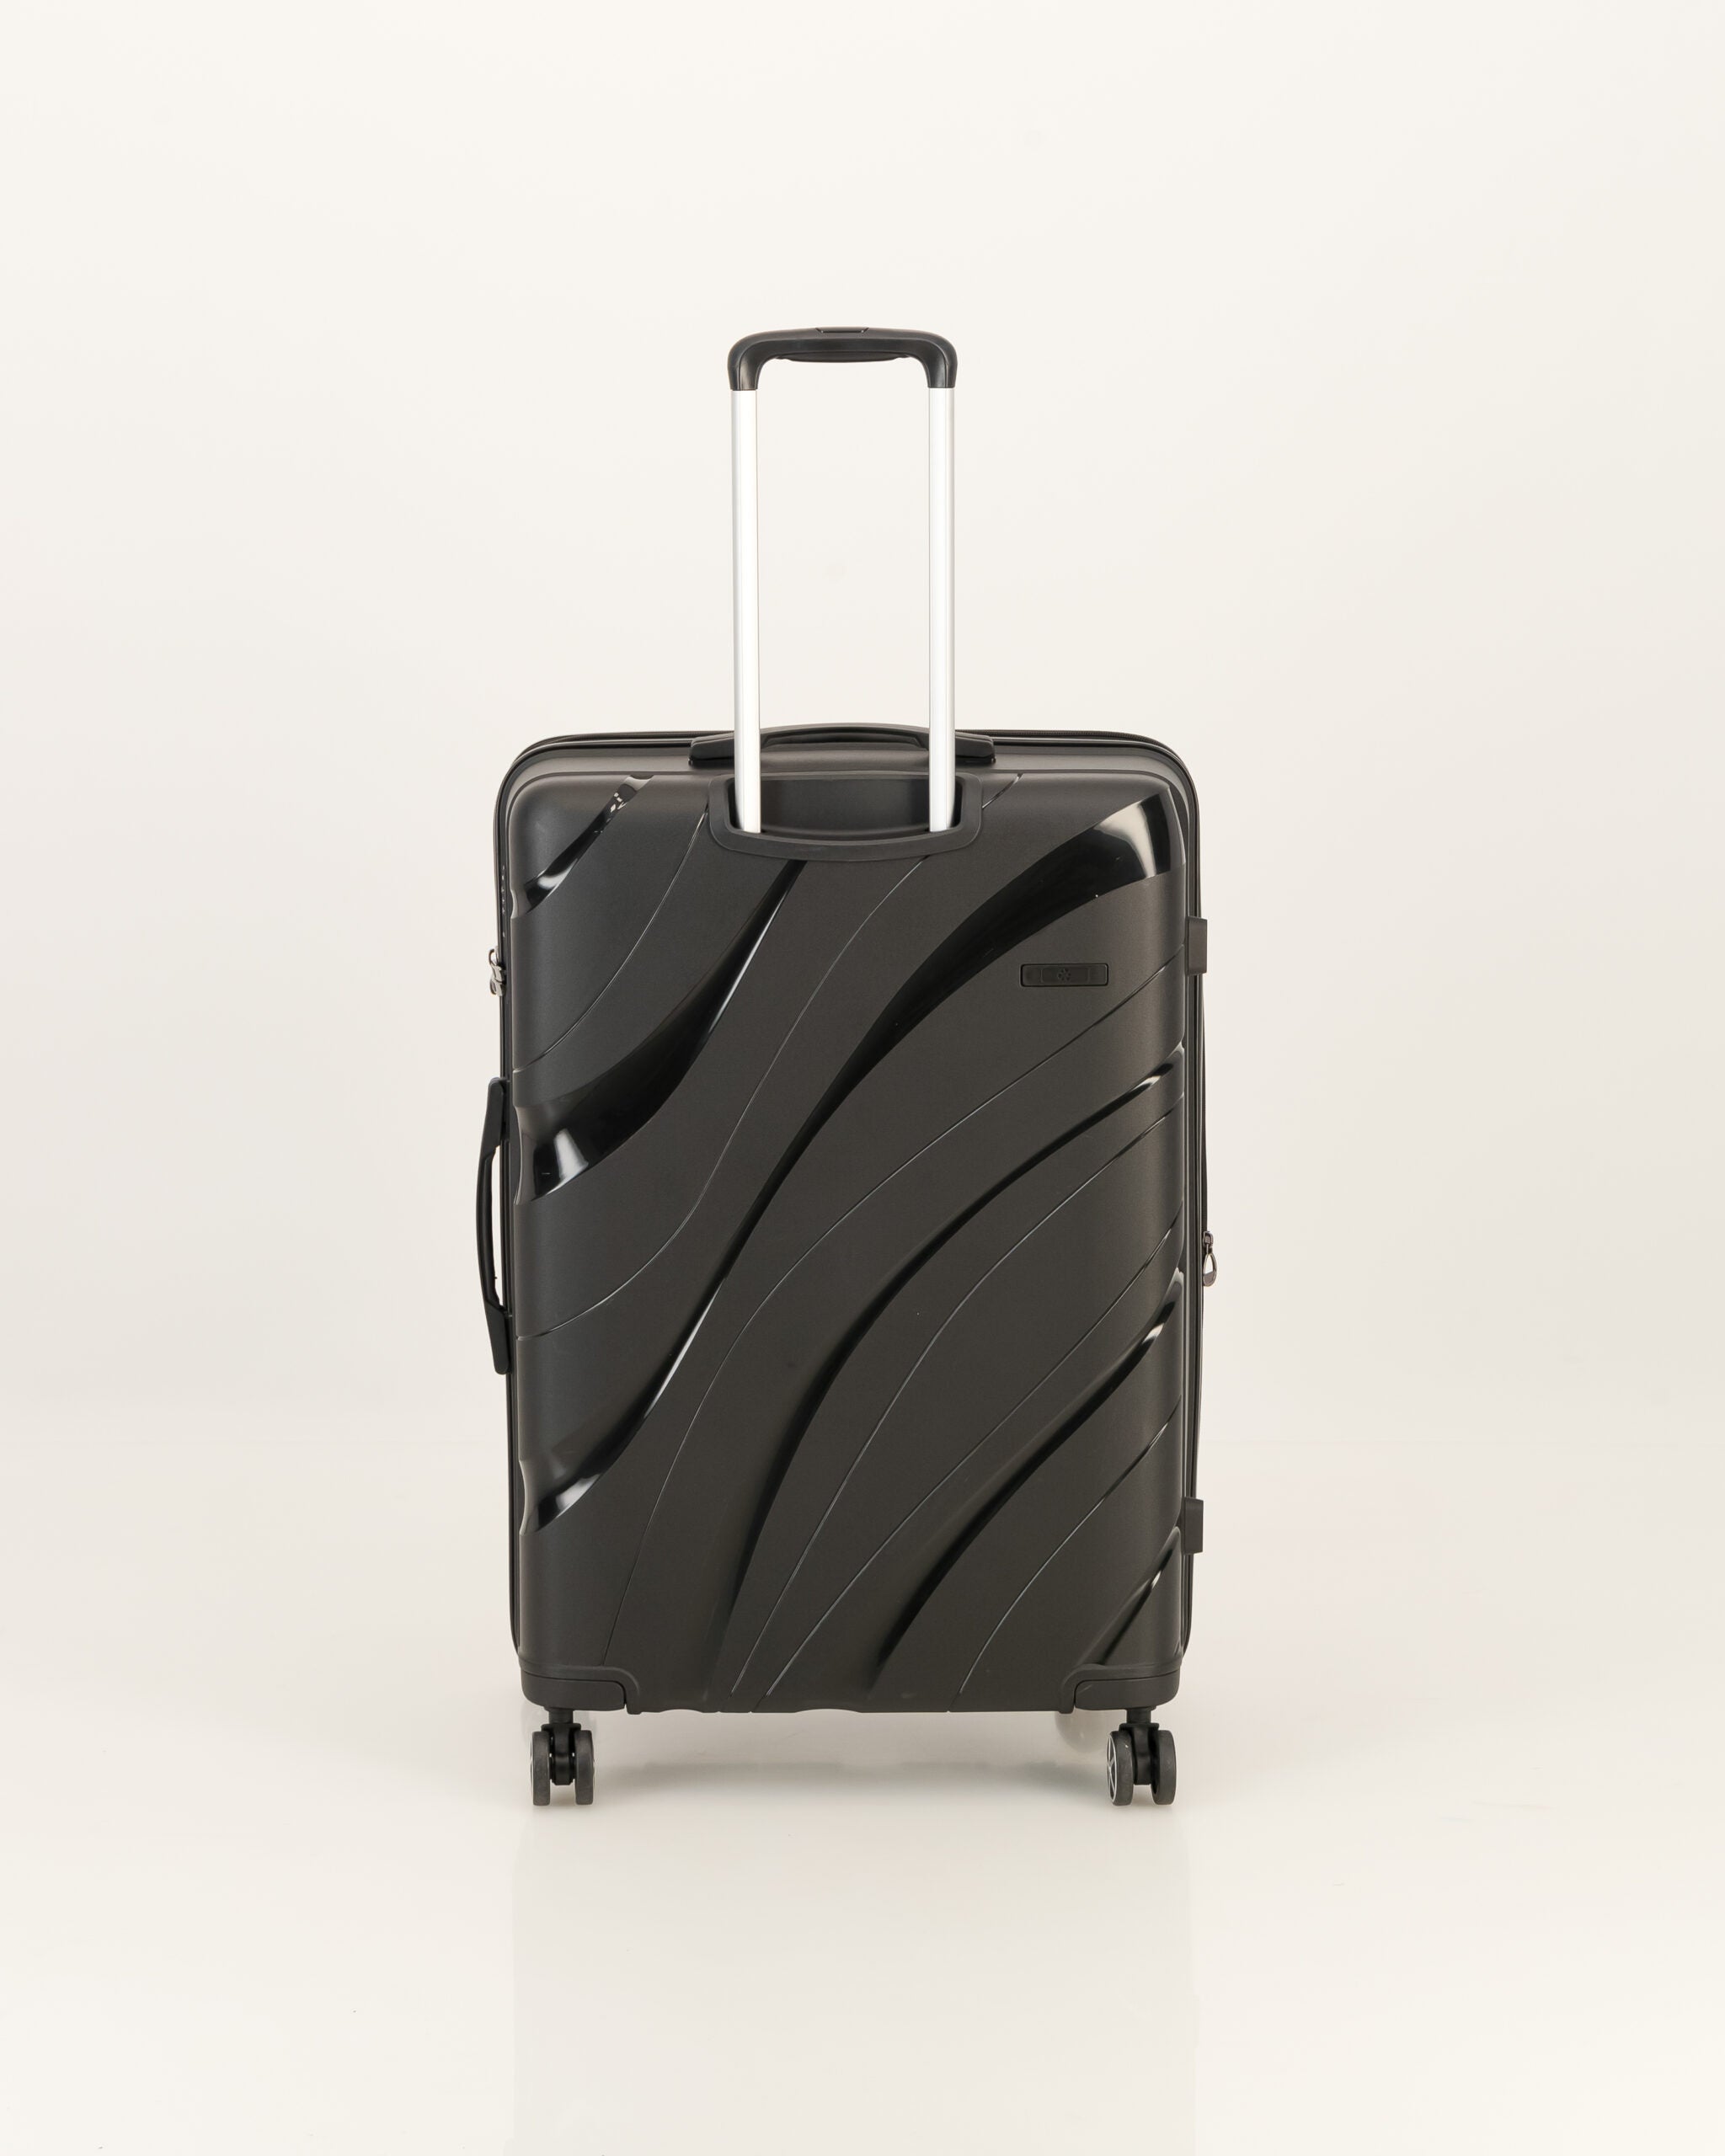 Orbit blk rear full suitcase_CR2_11